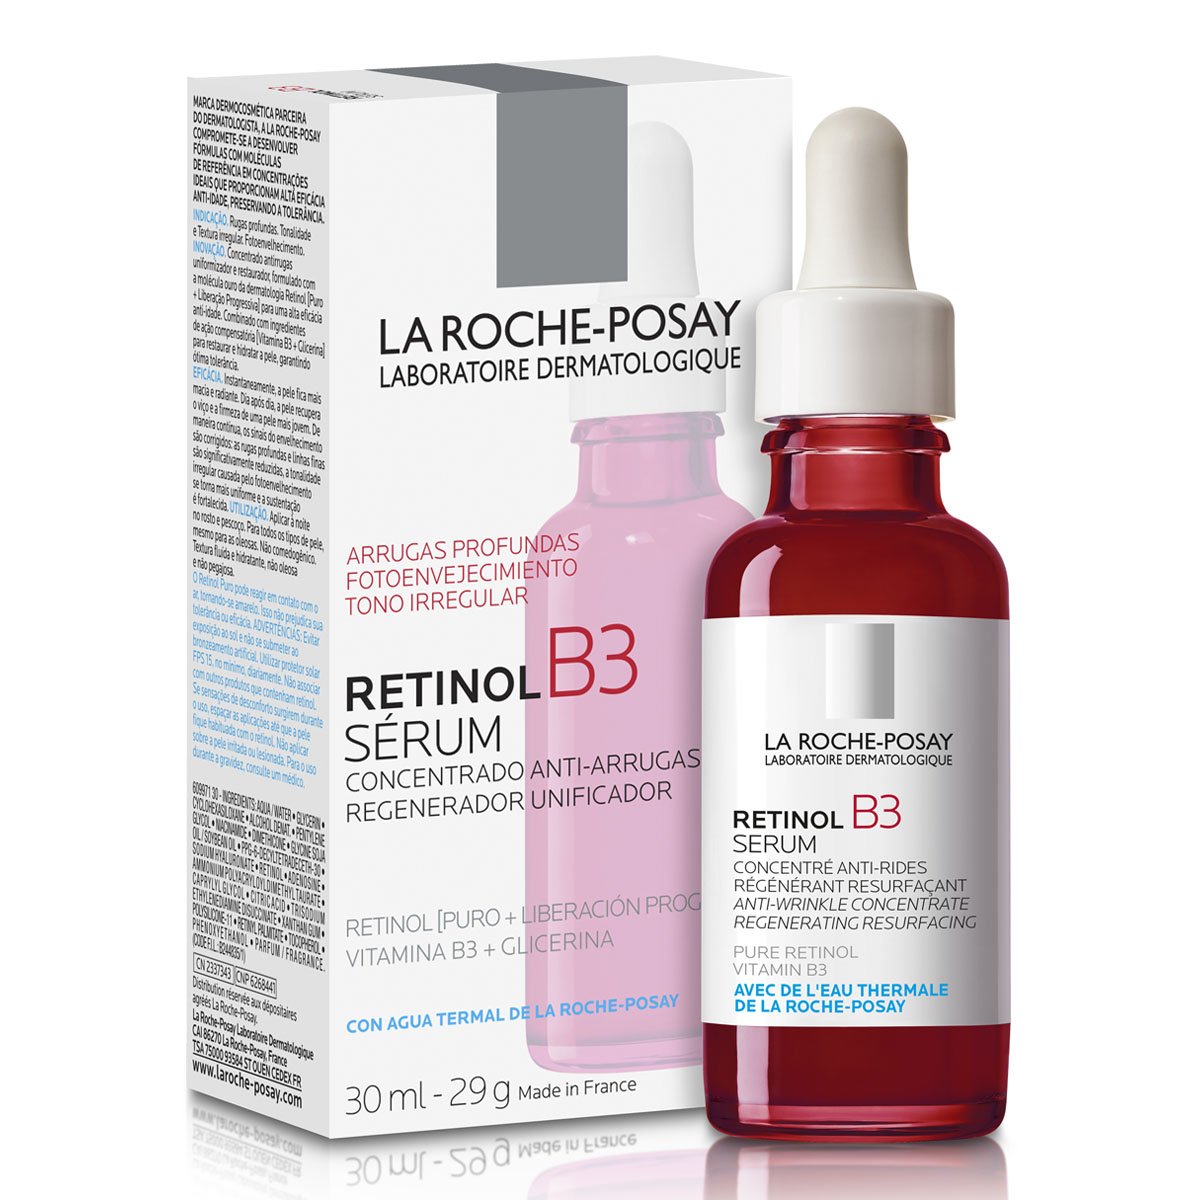 Laroche posay Retinol Serum B3 